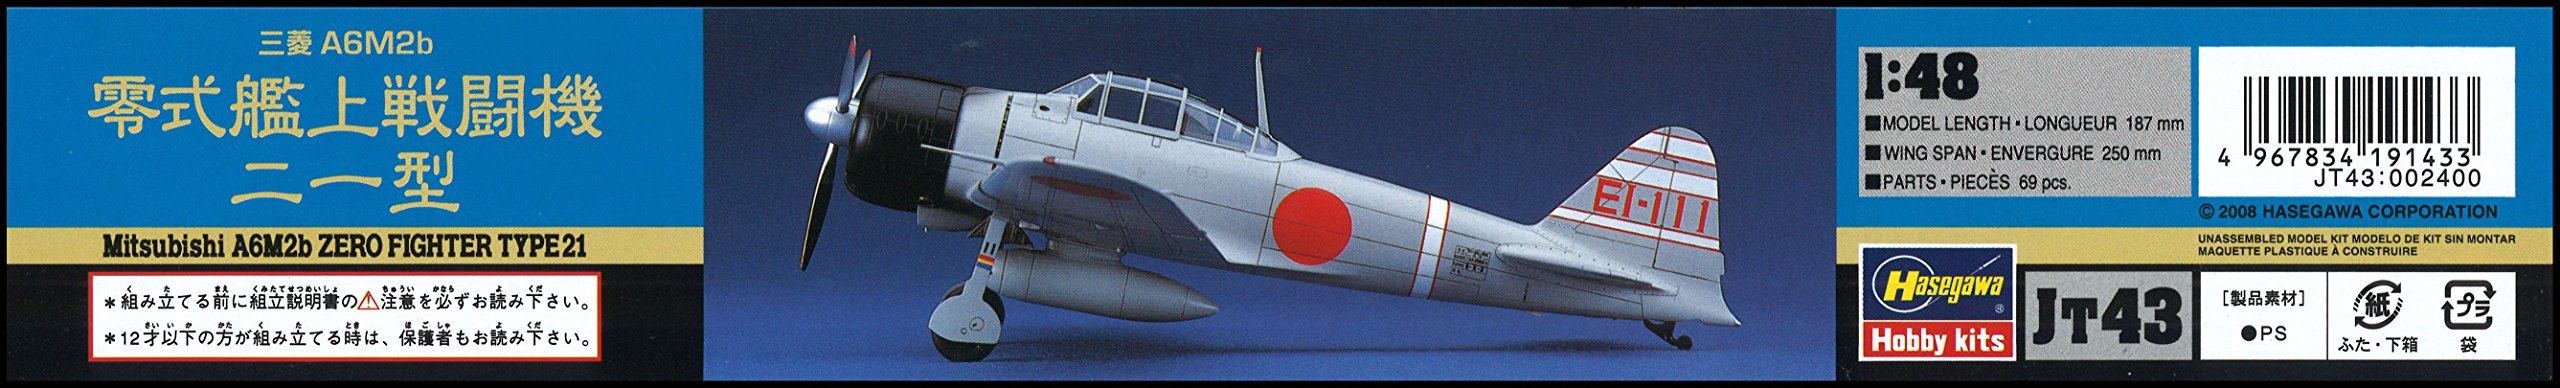 HASEGAWA 1/48 Mitsubishi A6M2B Zero Fighter Type 21 Plastic Model